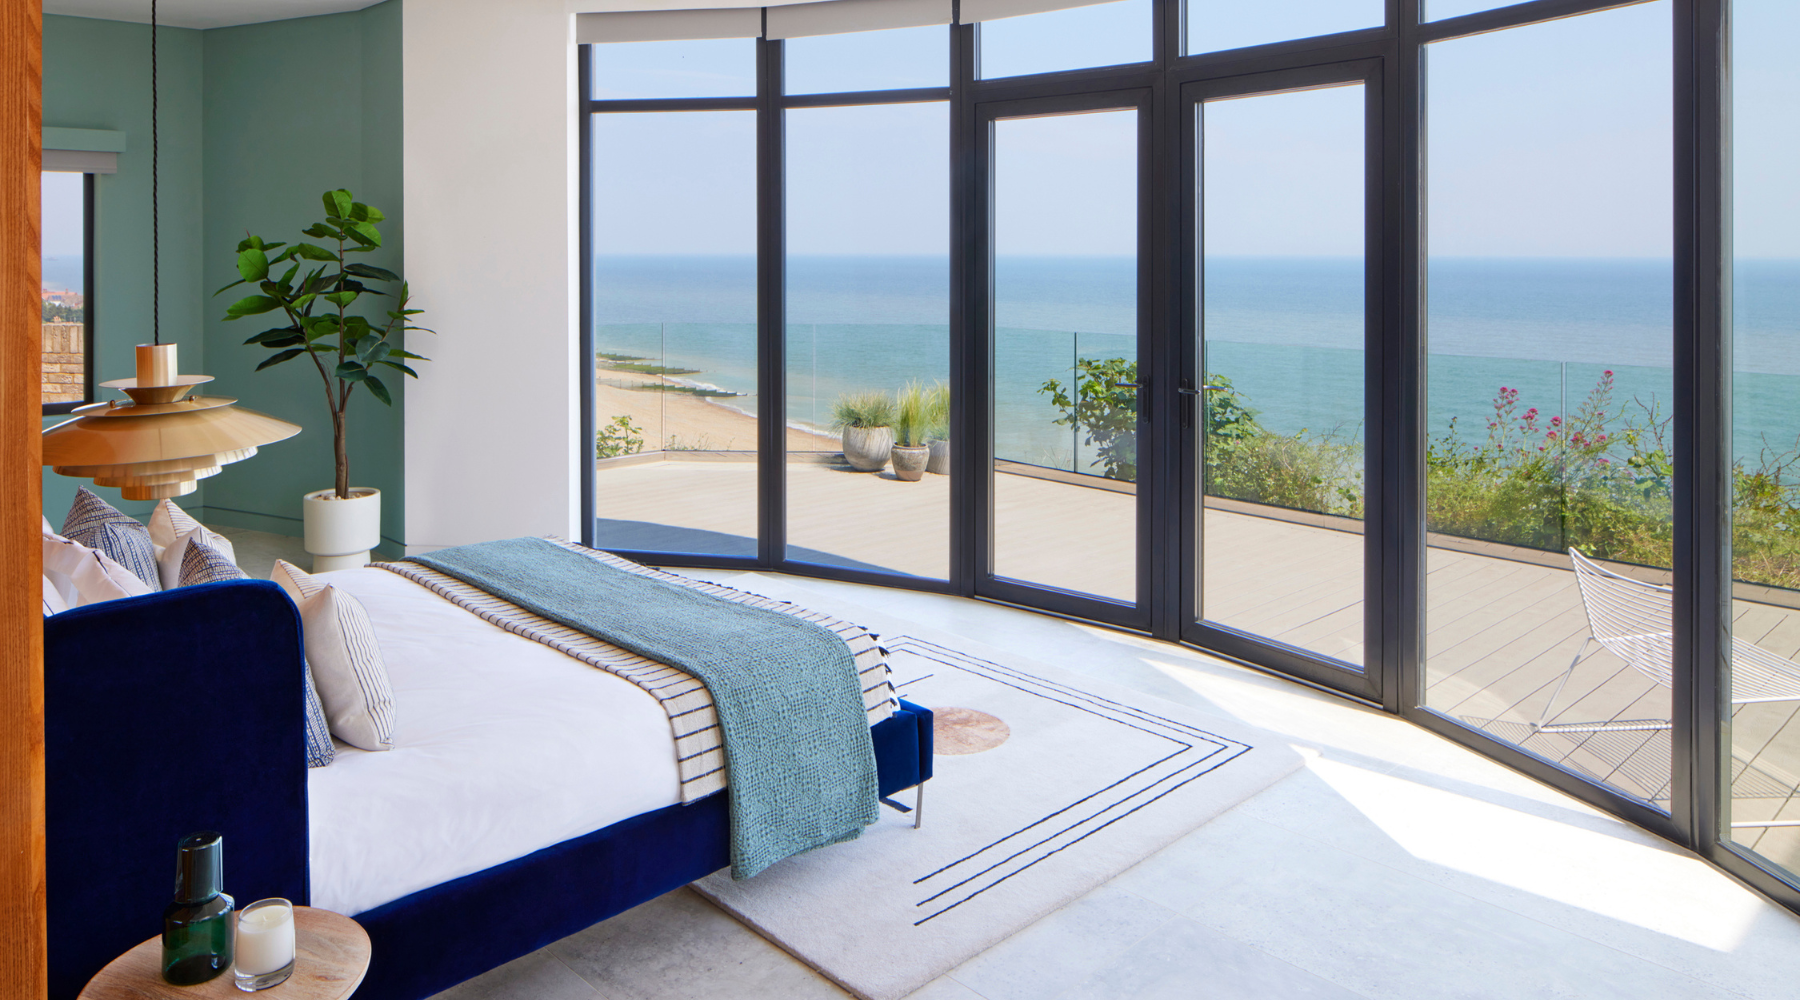 Omaze Million Pound House Draw Kent Beachfront Bedroom Panorama